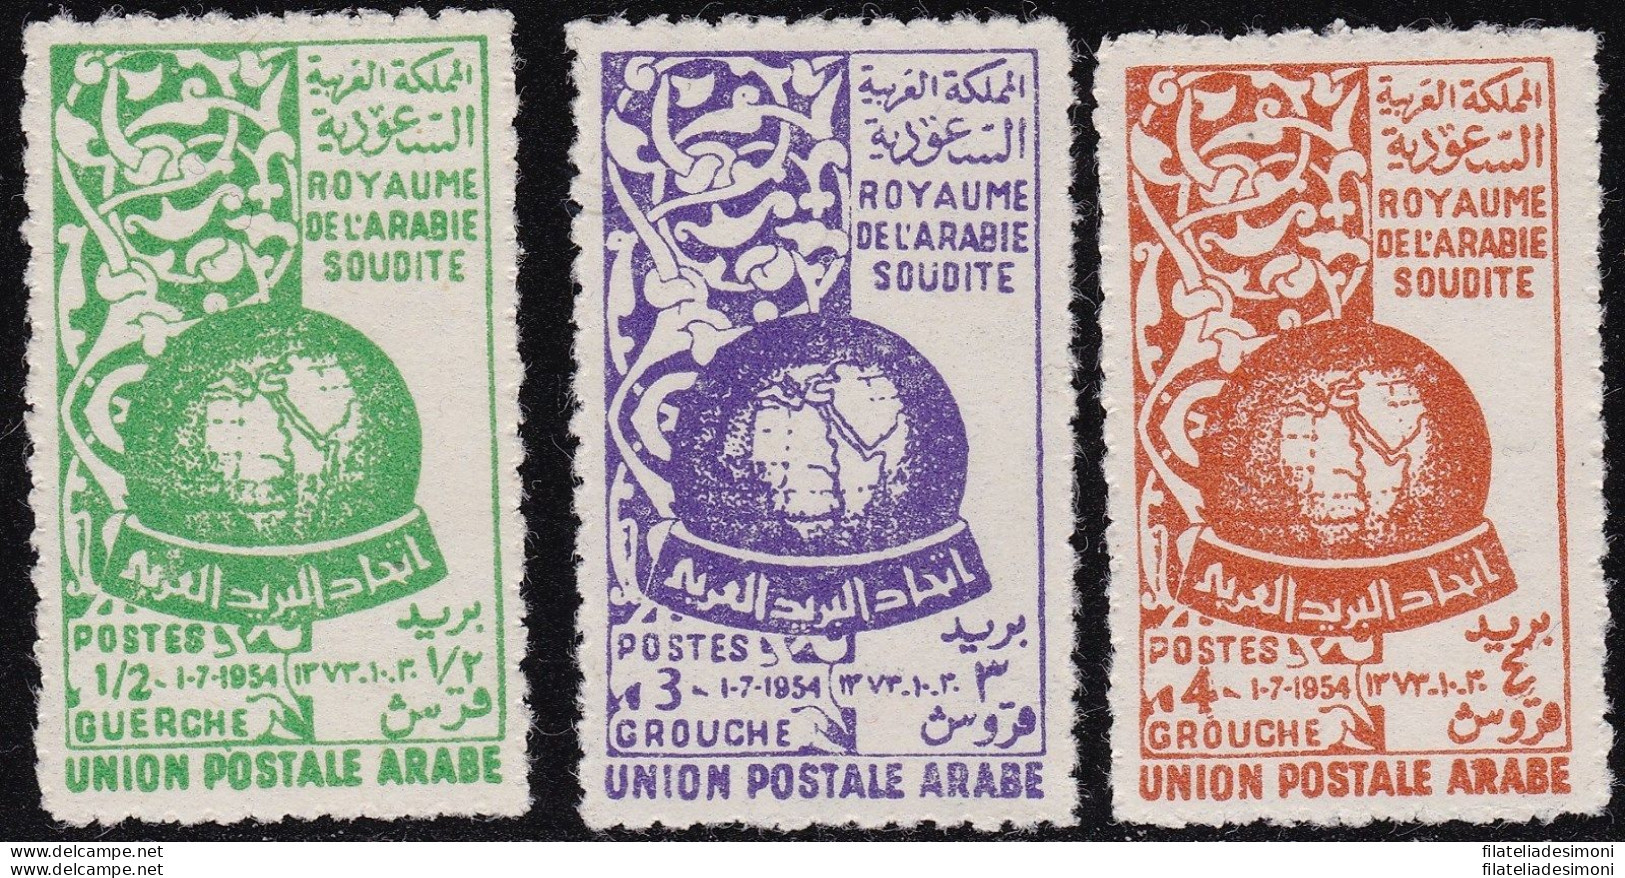 1955 ARABIA SAUDITA/SAUDI ARABIA, SG 383/385 Set Of 3 MNH/** - Arabia Saudita